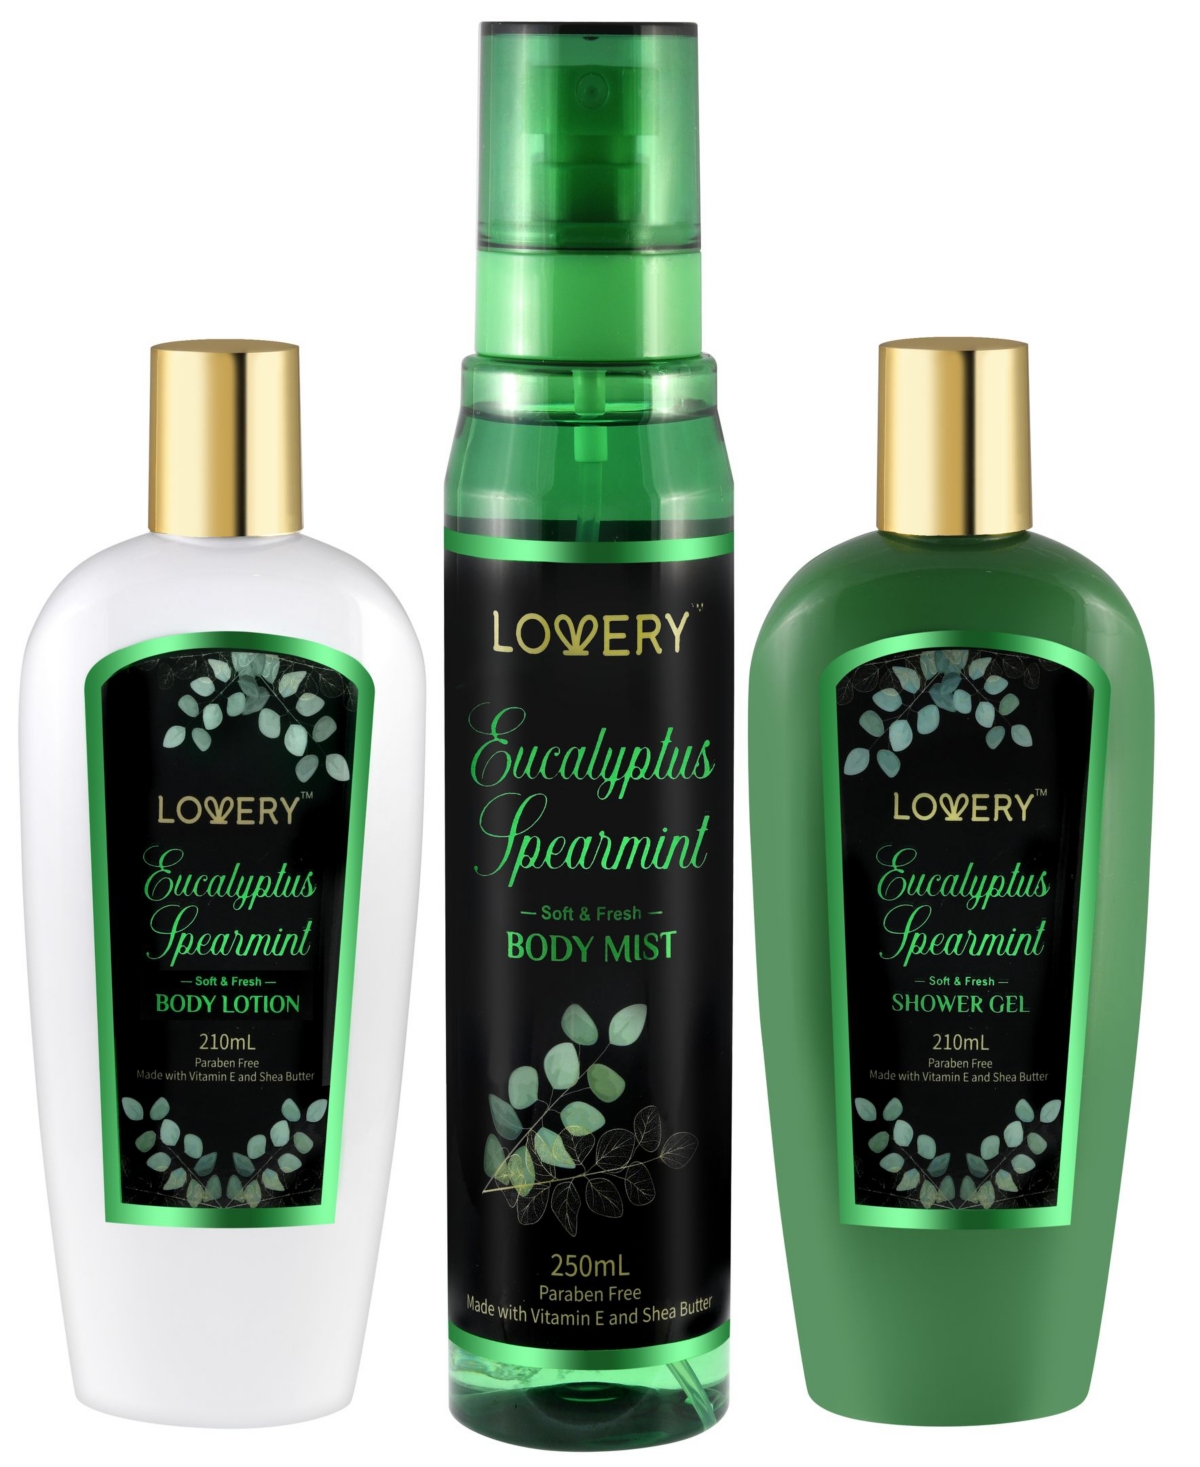 Lovery 3-pc. Eucalyptus Spearmint Bath & Body Set